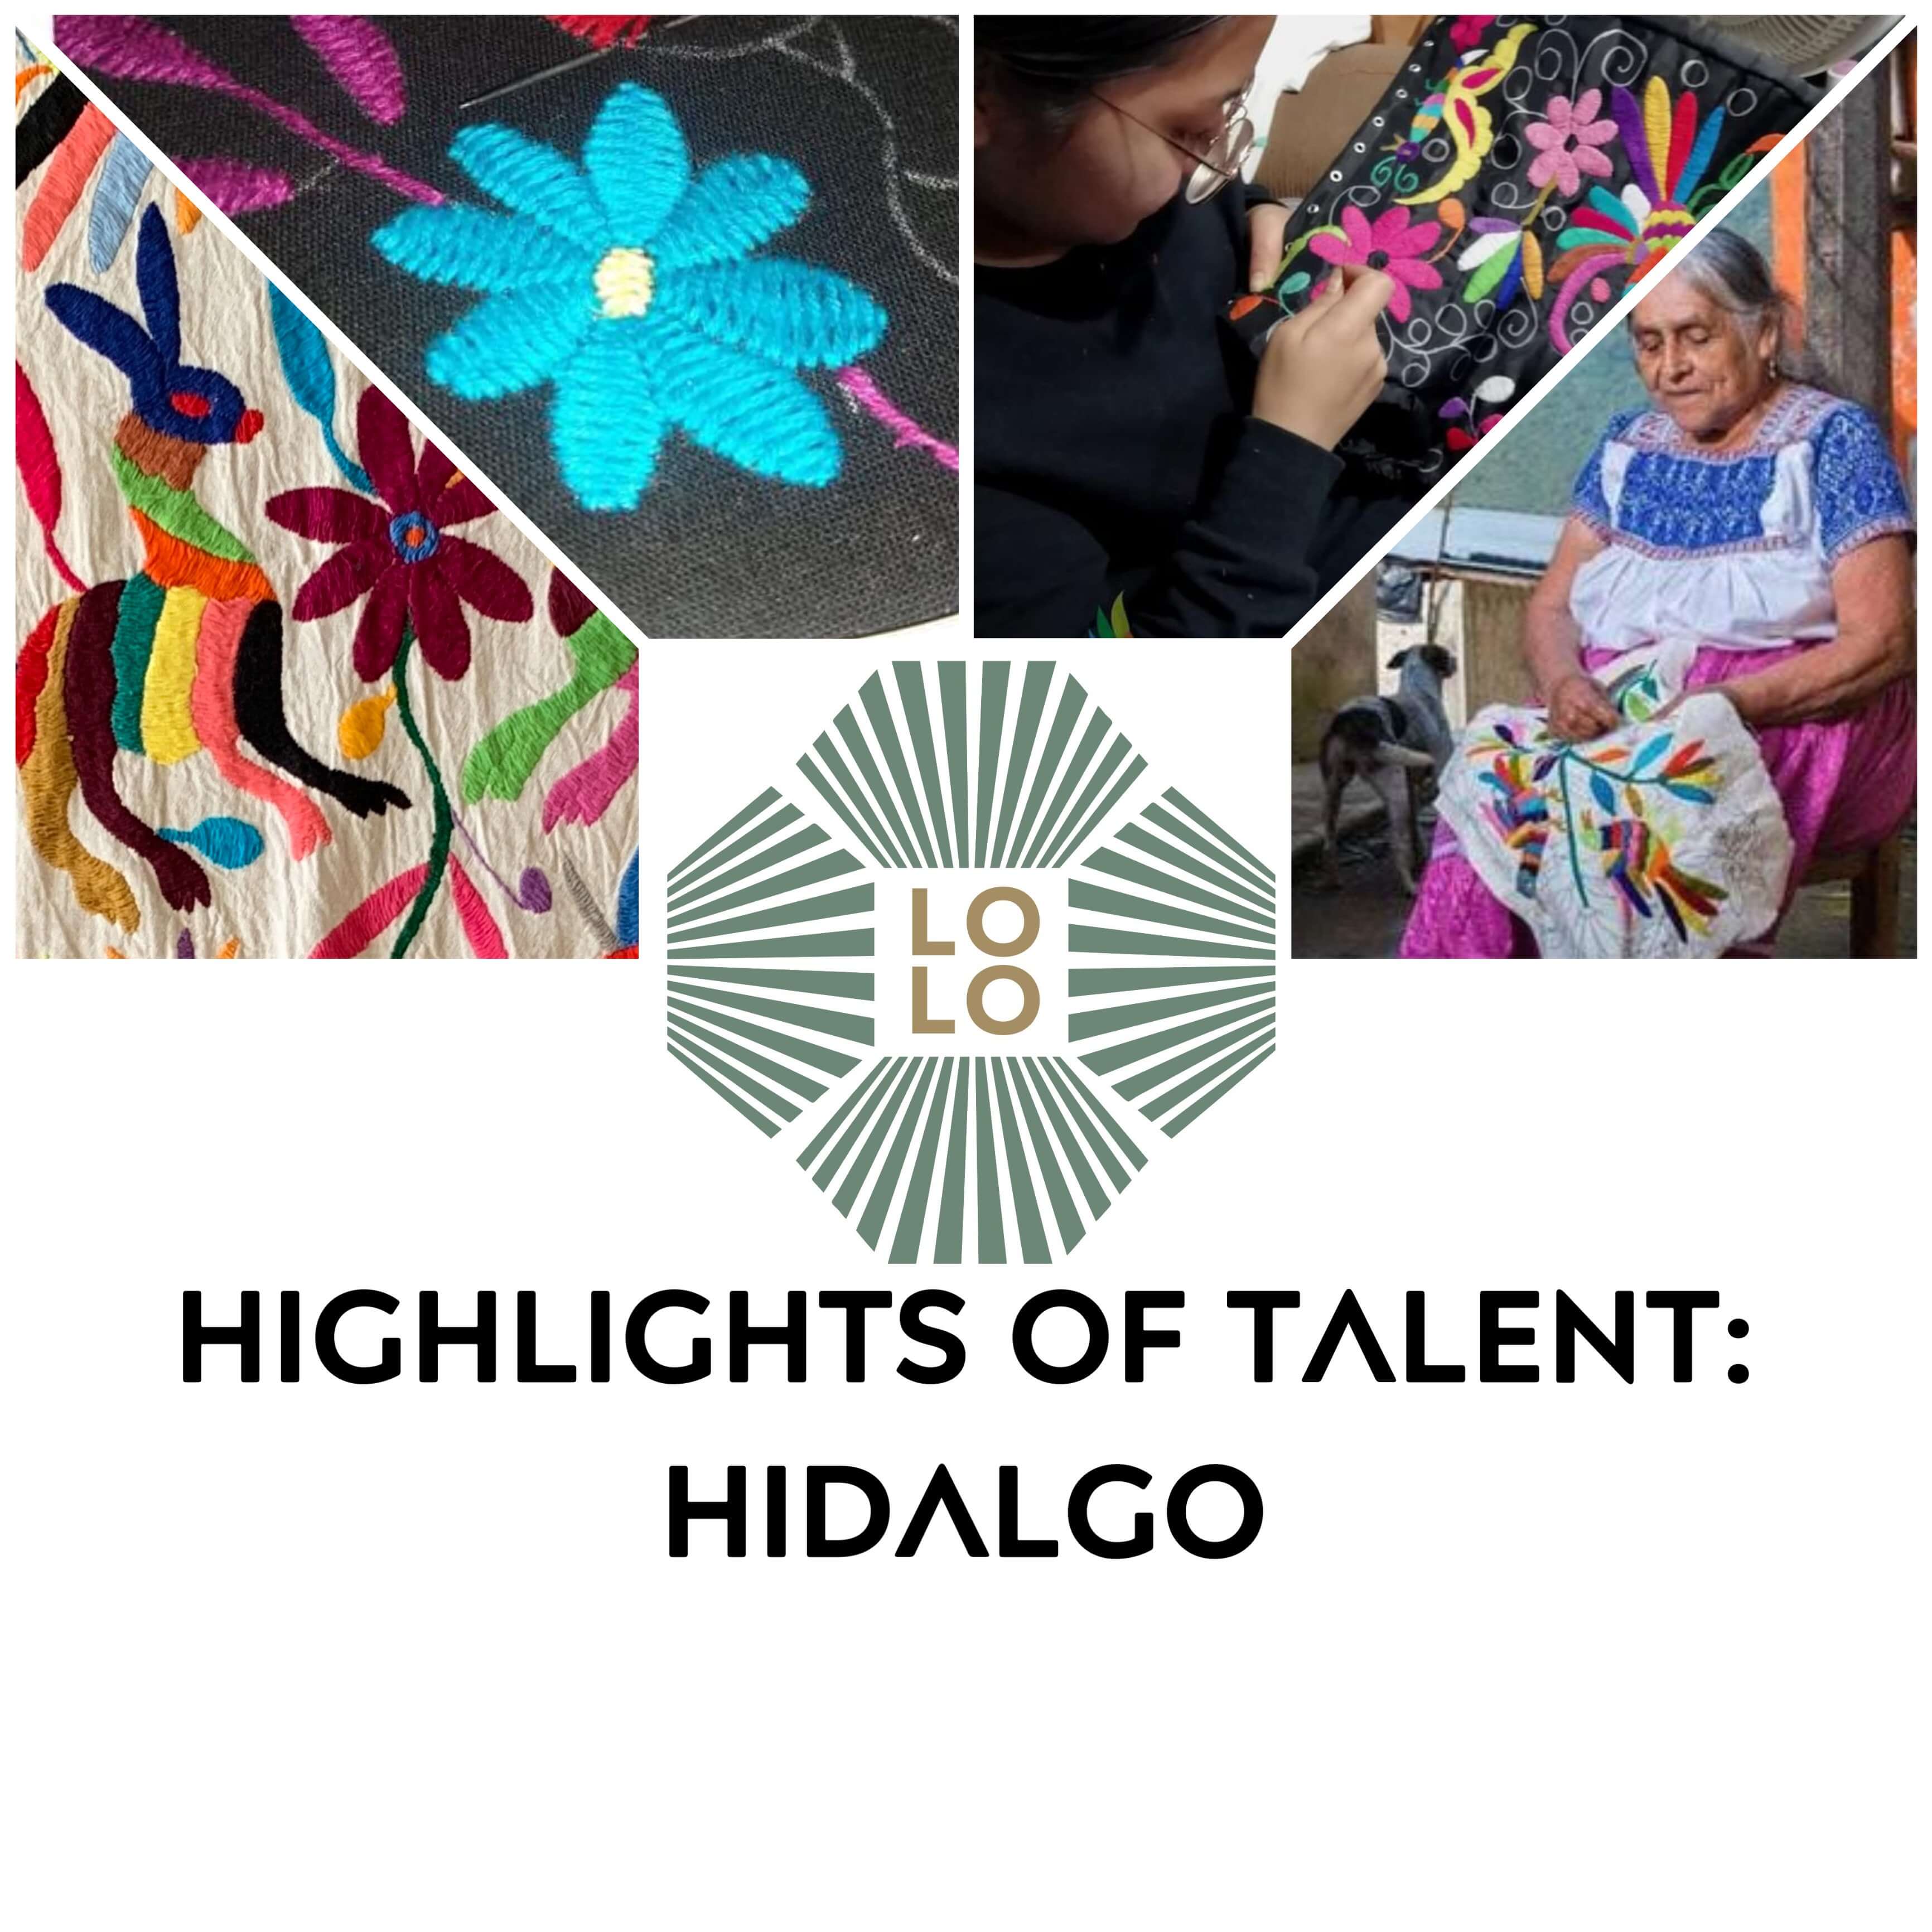 Highlights of Talent: Hidalgo